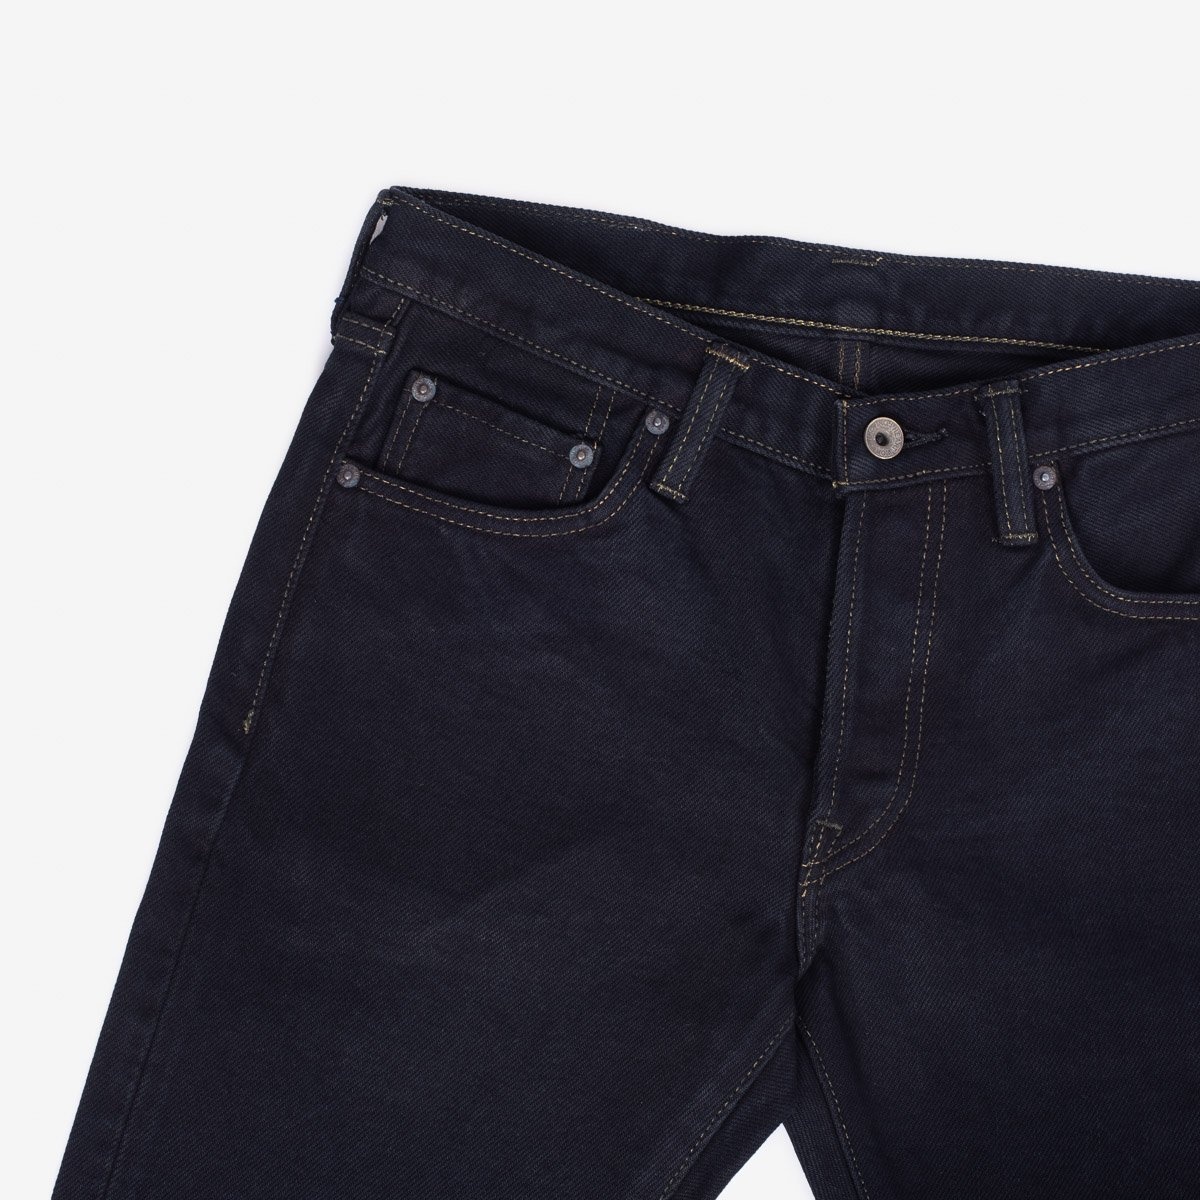 14oz Selvedge Denim Slim Tapered Cut Jeans - Indigo/Black